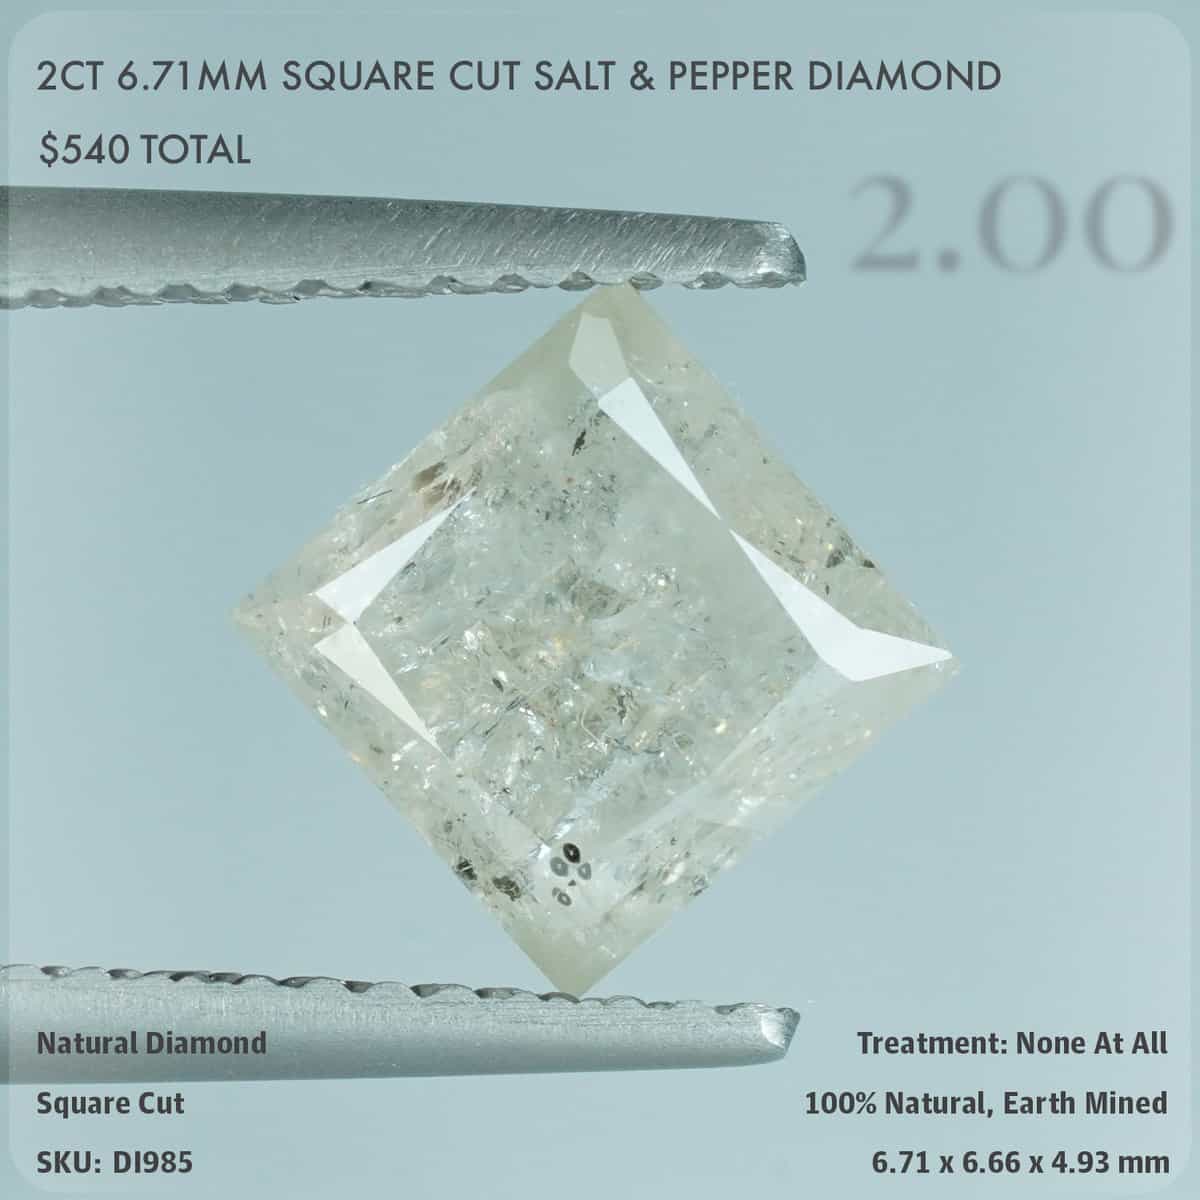 2CT 6.71mm Square Cut Salt & Pepper Diamond